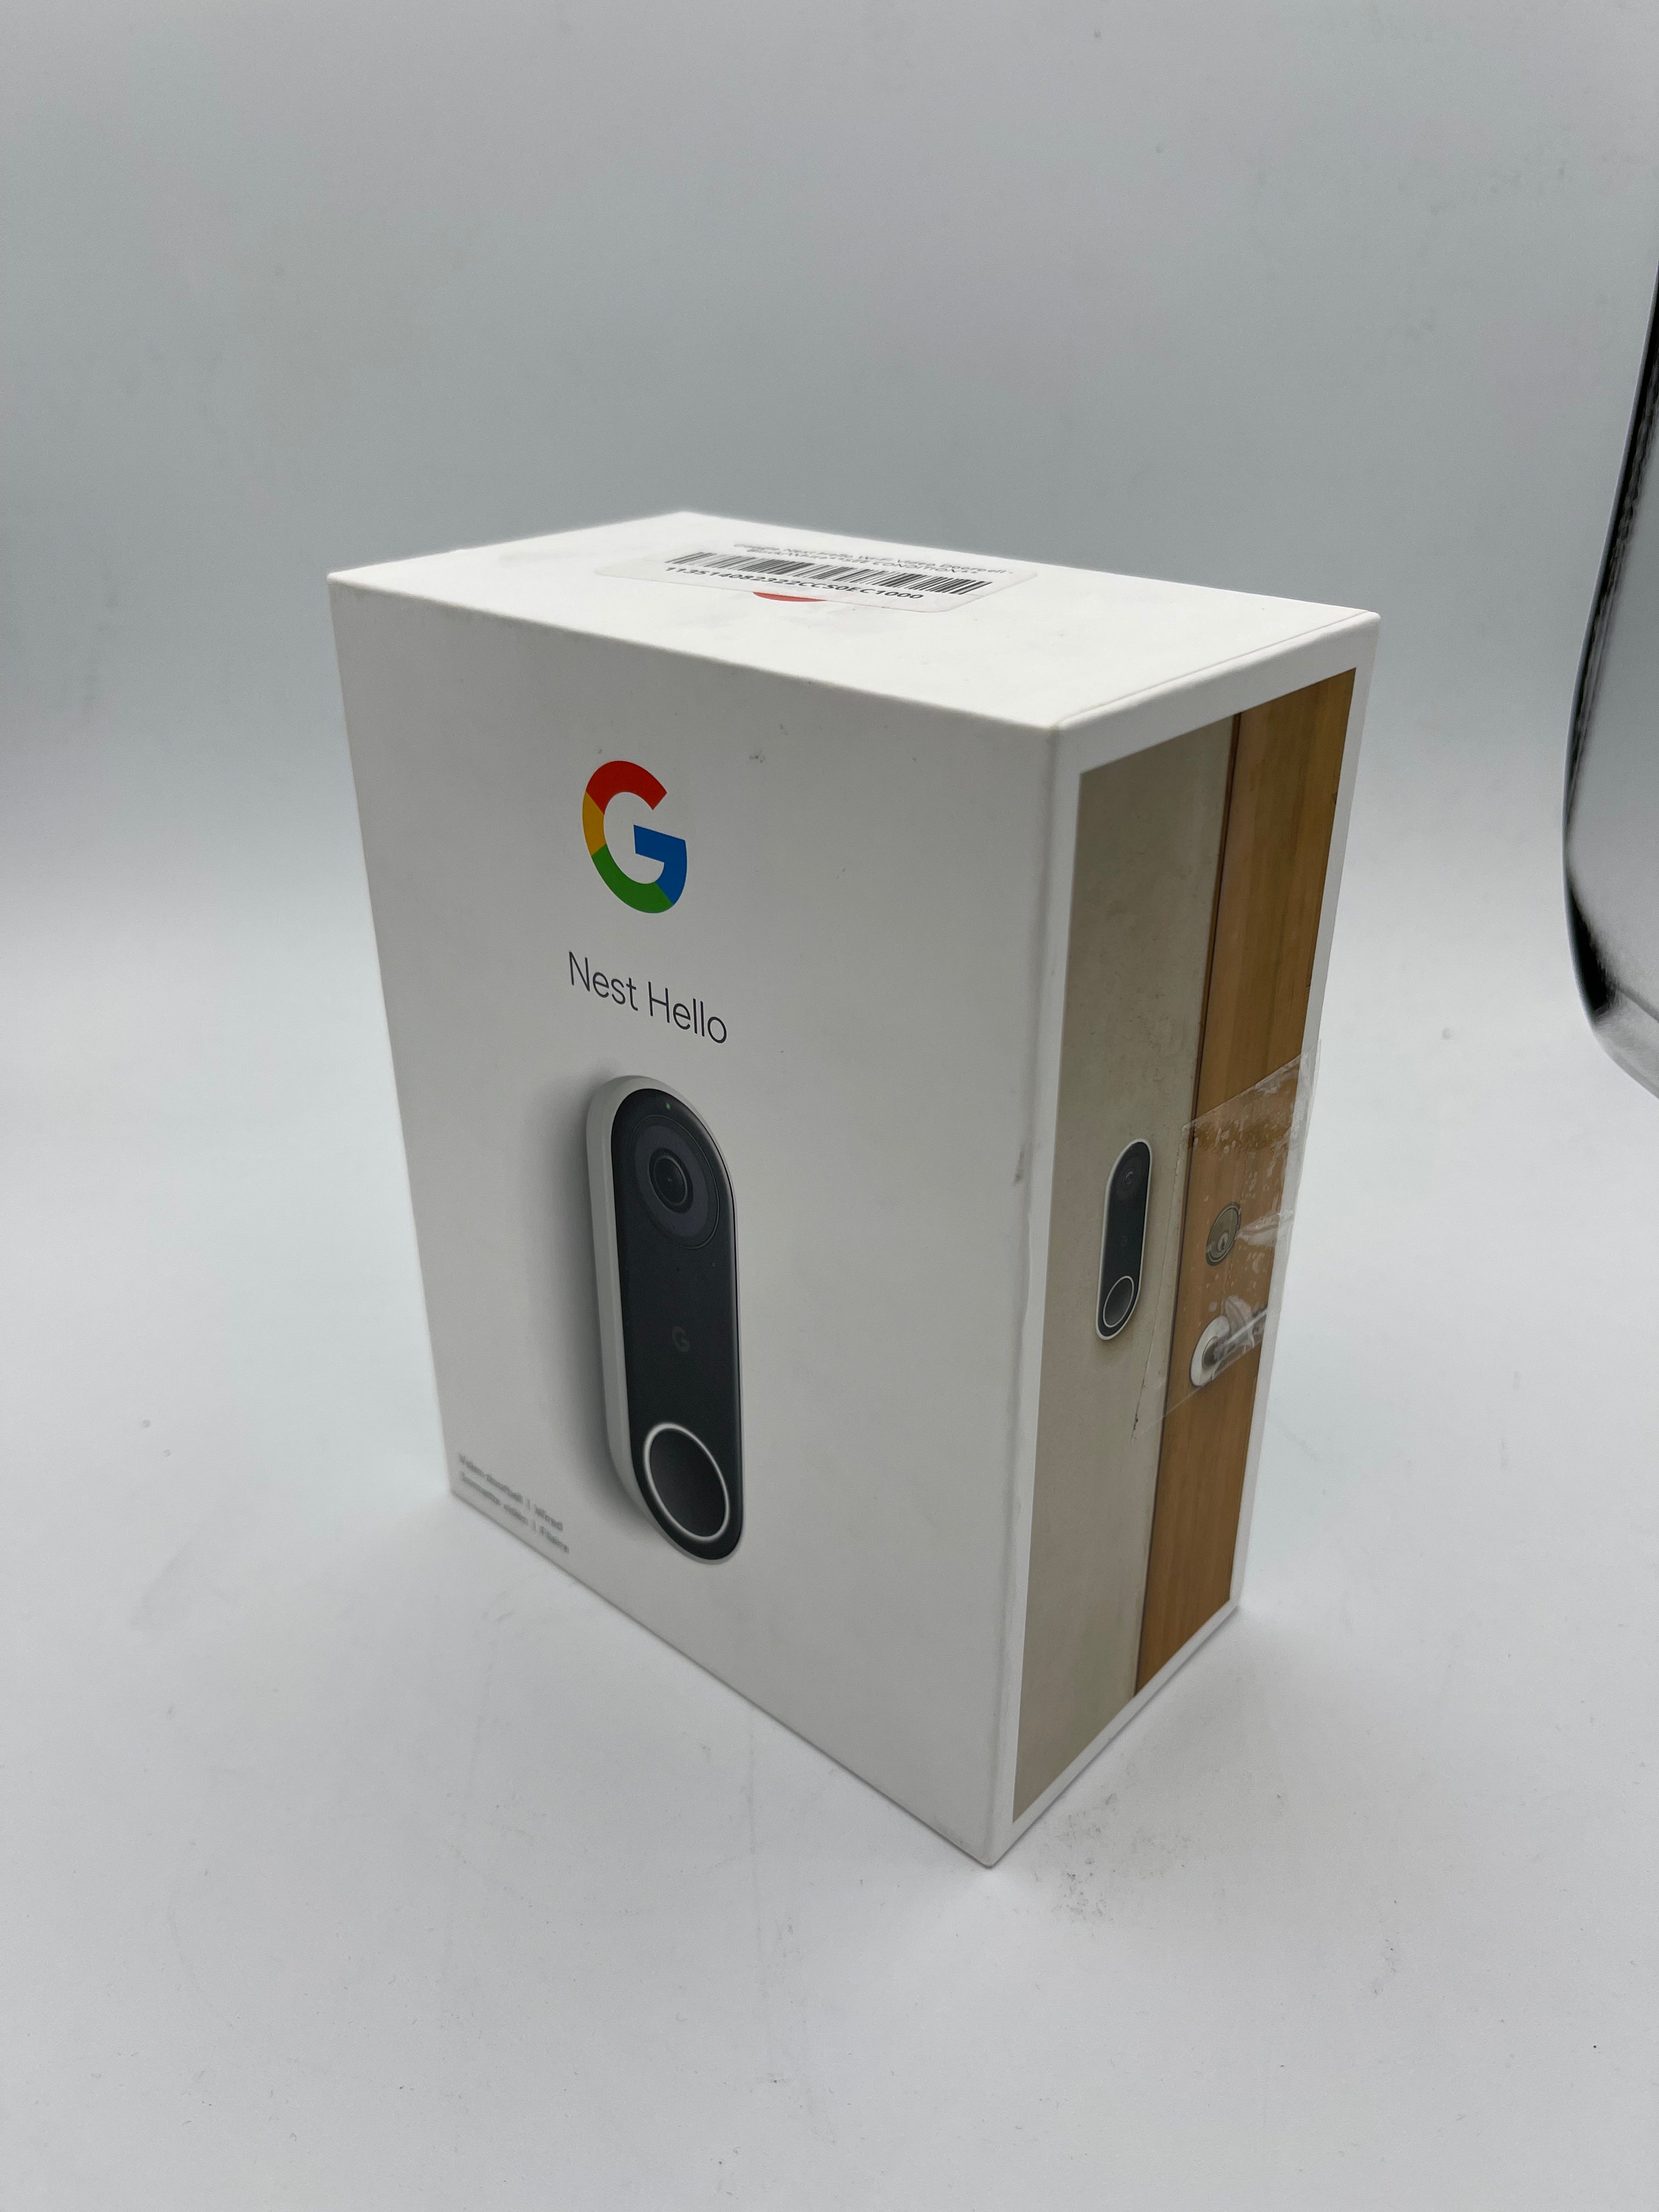 Google Nest Hello Wi-Fi Video Doorbell